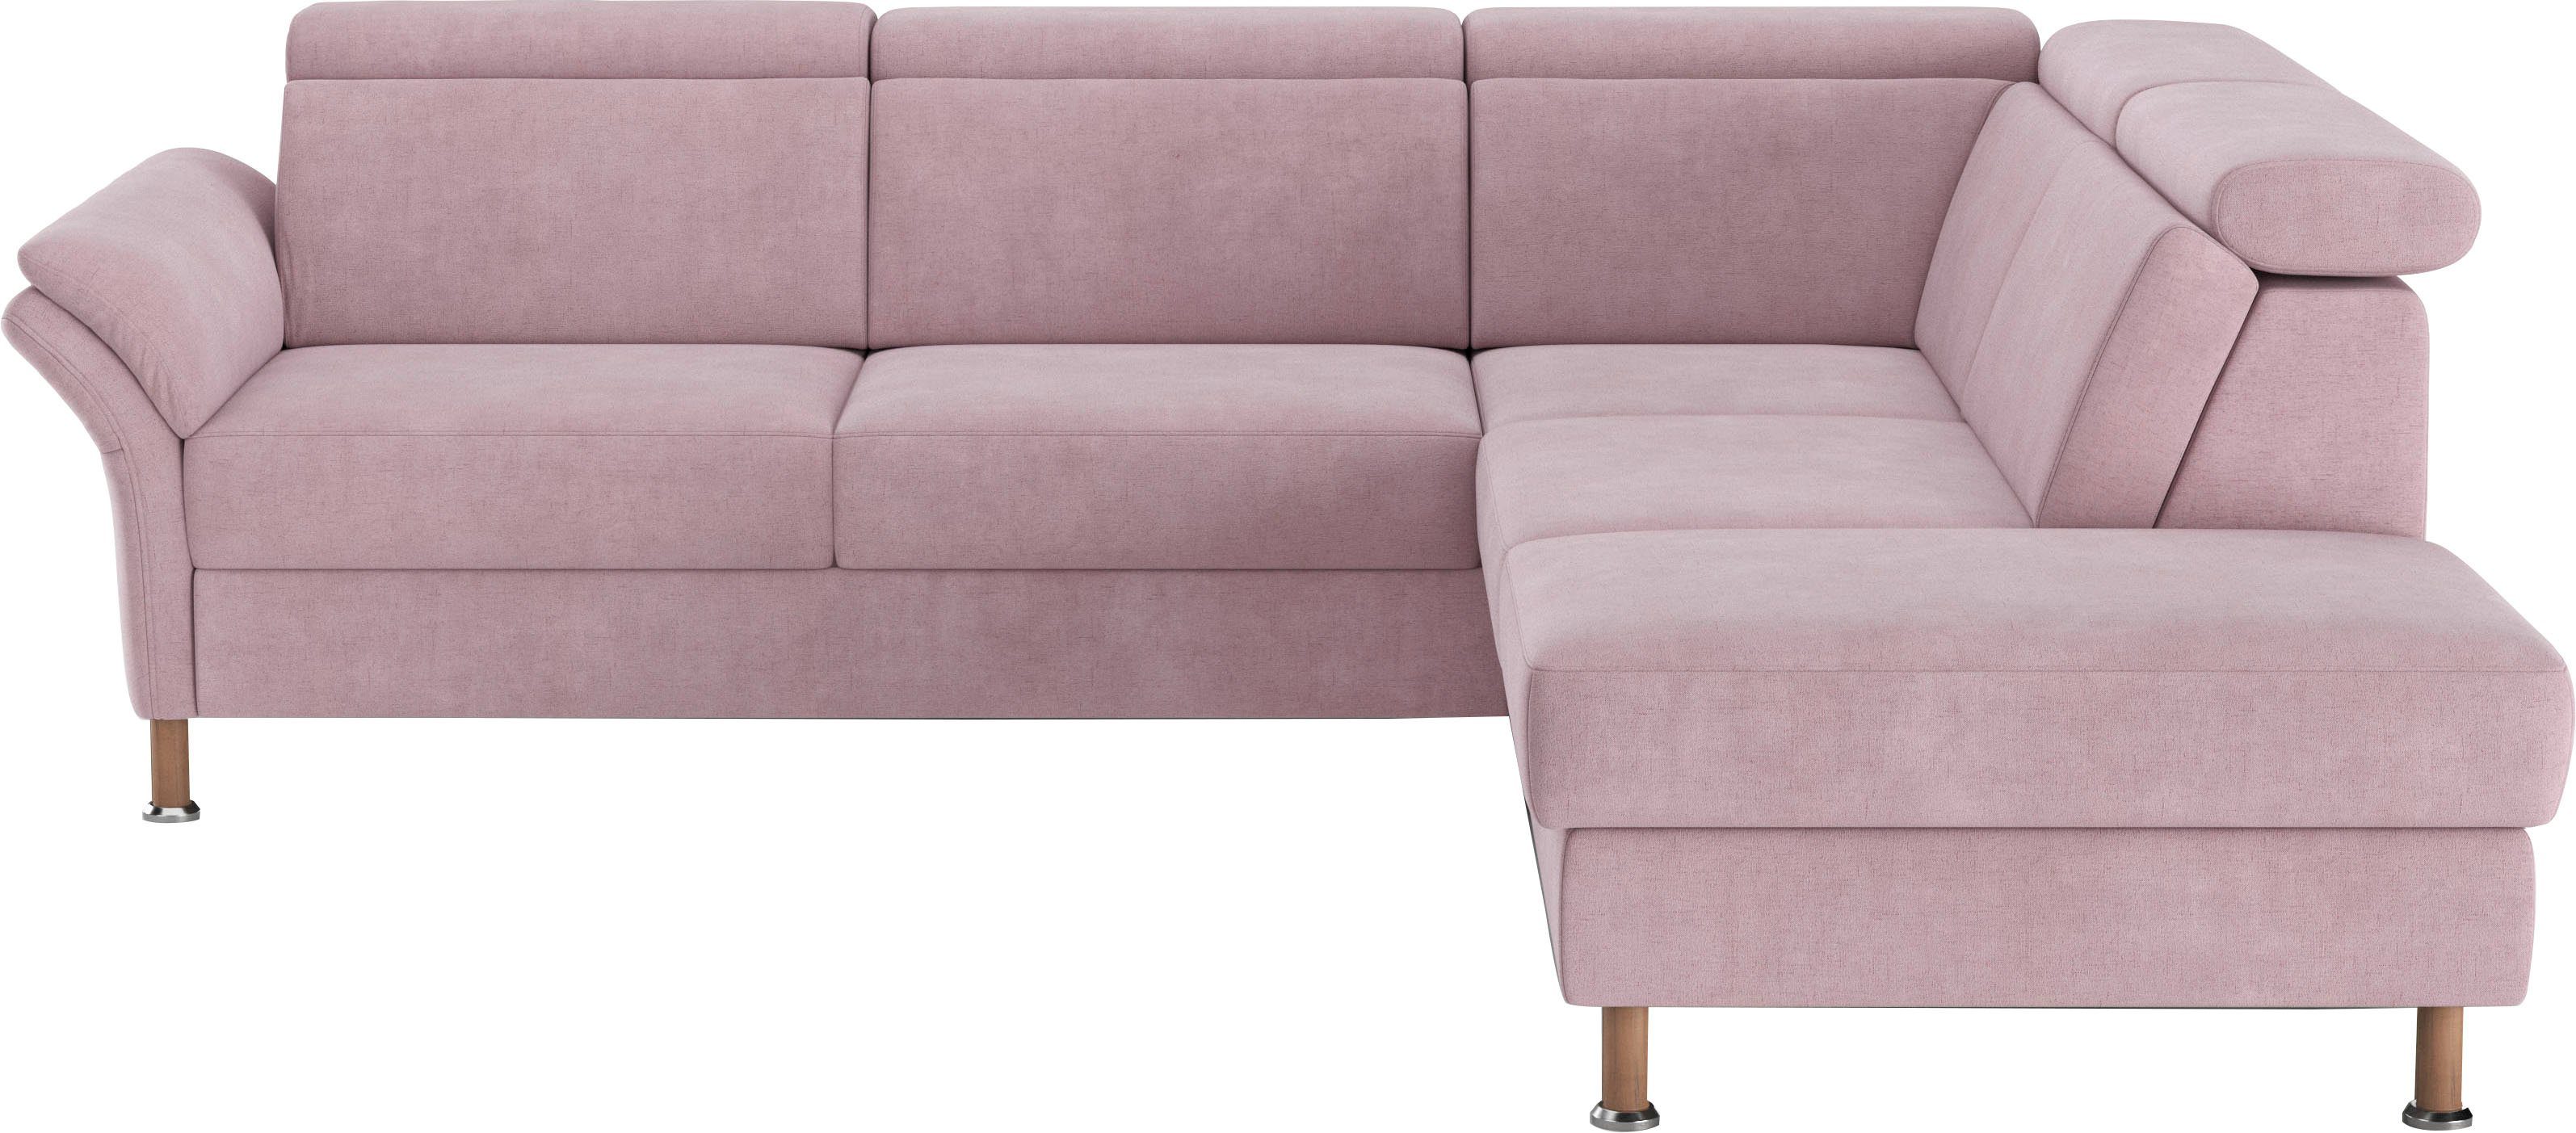 Home affaire Ecksofa Calypso L-Form, mit Relaxfunktion motorisch im Sofa 2,5- Sitzer